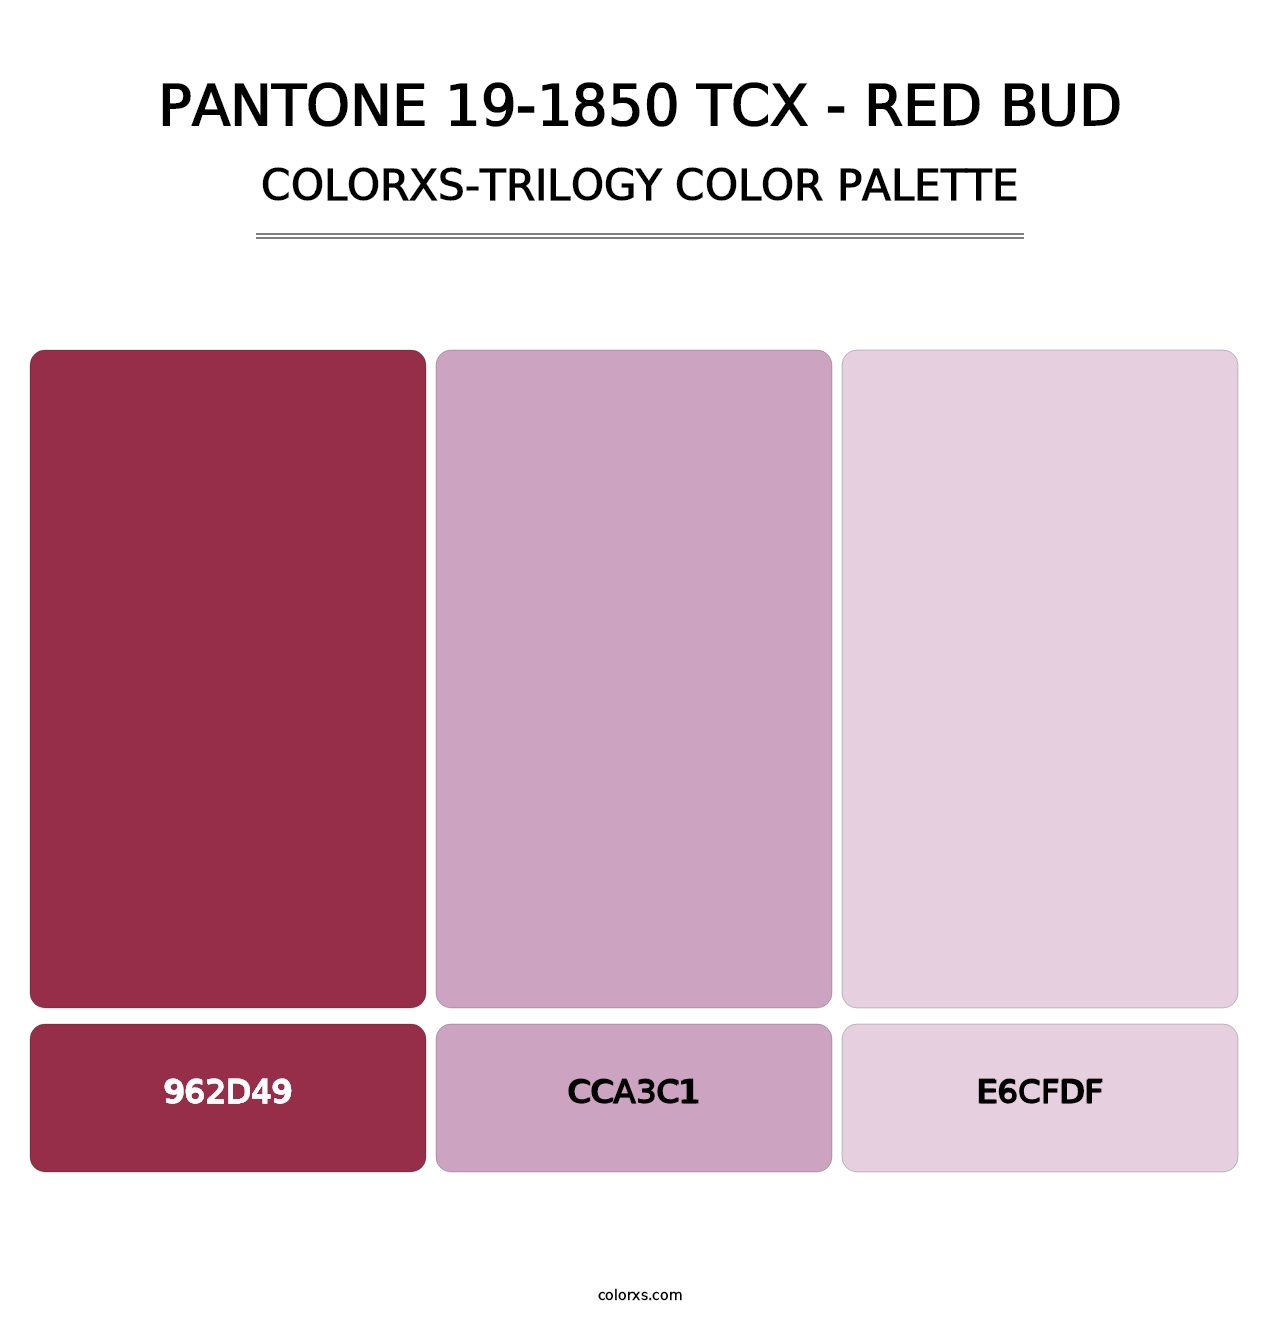 PANTONE 19-1850 TCX - Red Bud - Colorxs Trilogy Palette